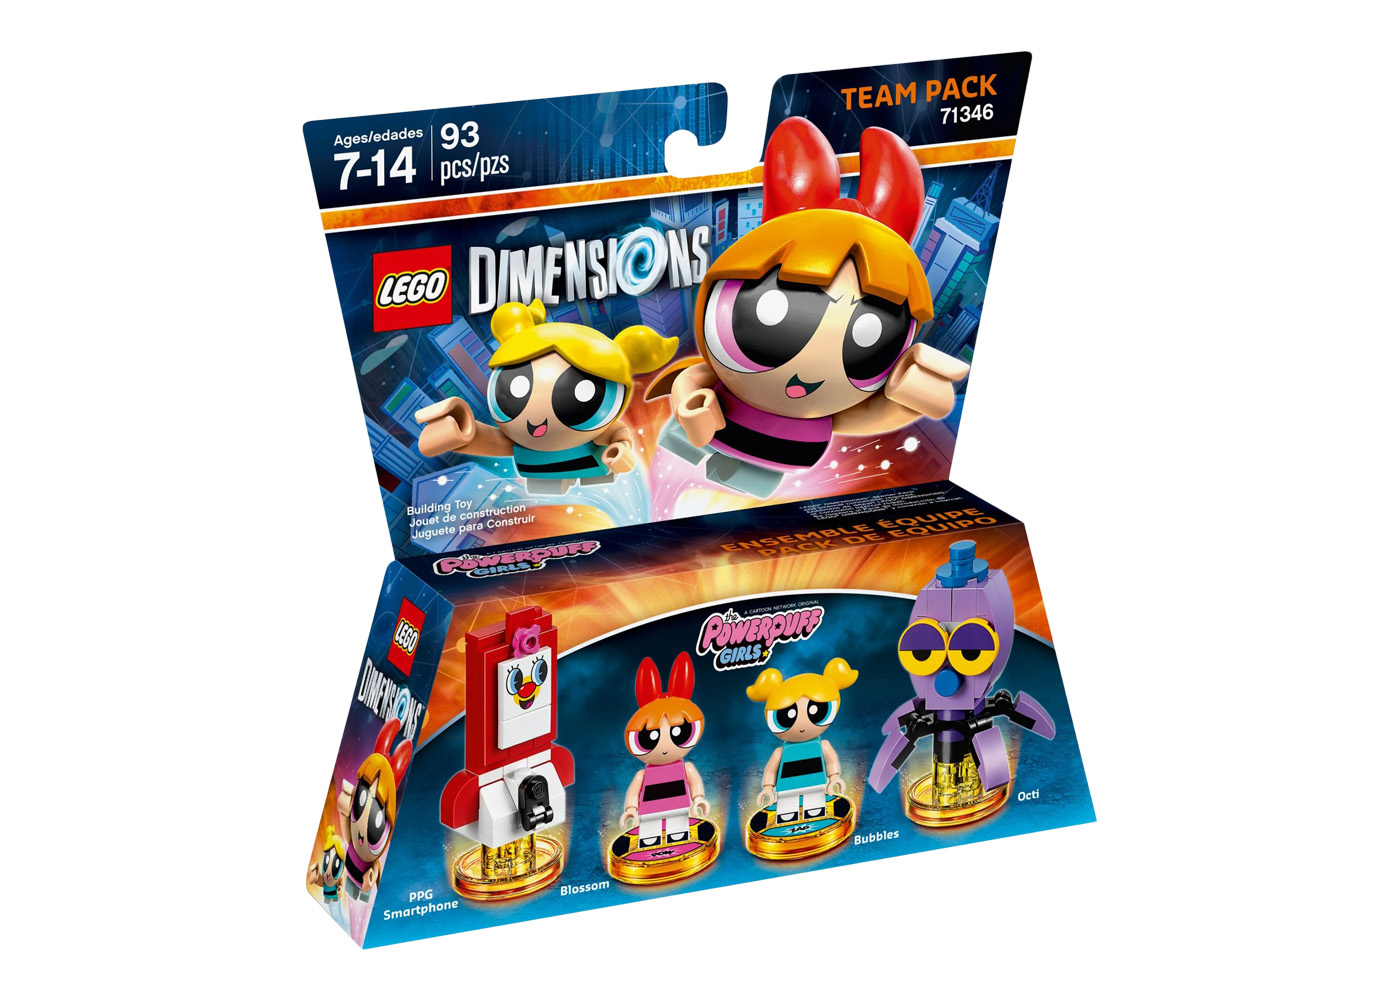 LEGO Dimensions The Powerpuff Girls Team Pack Set 71346 - SS15 - US